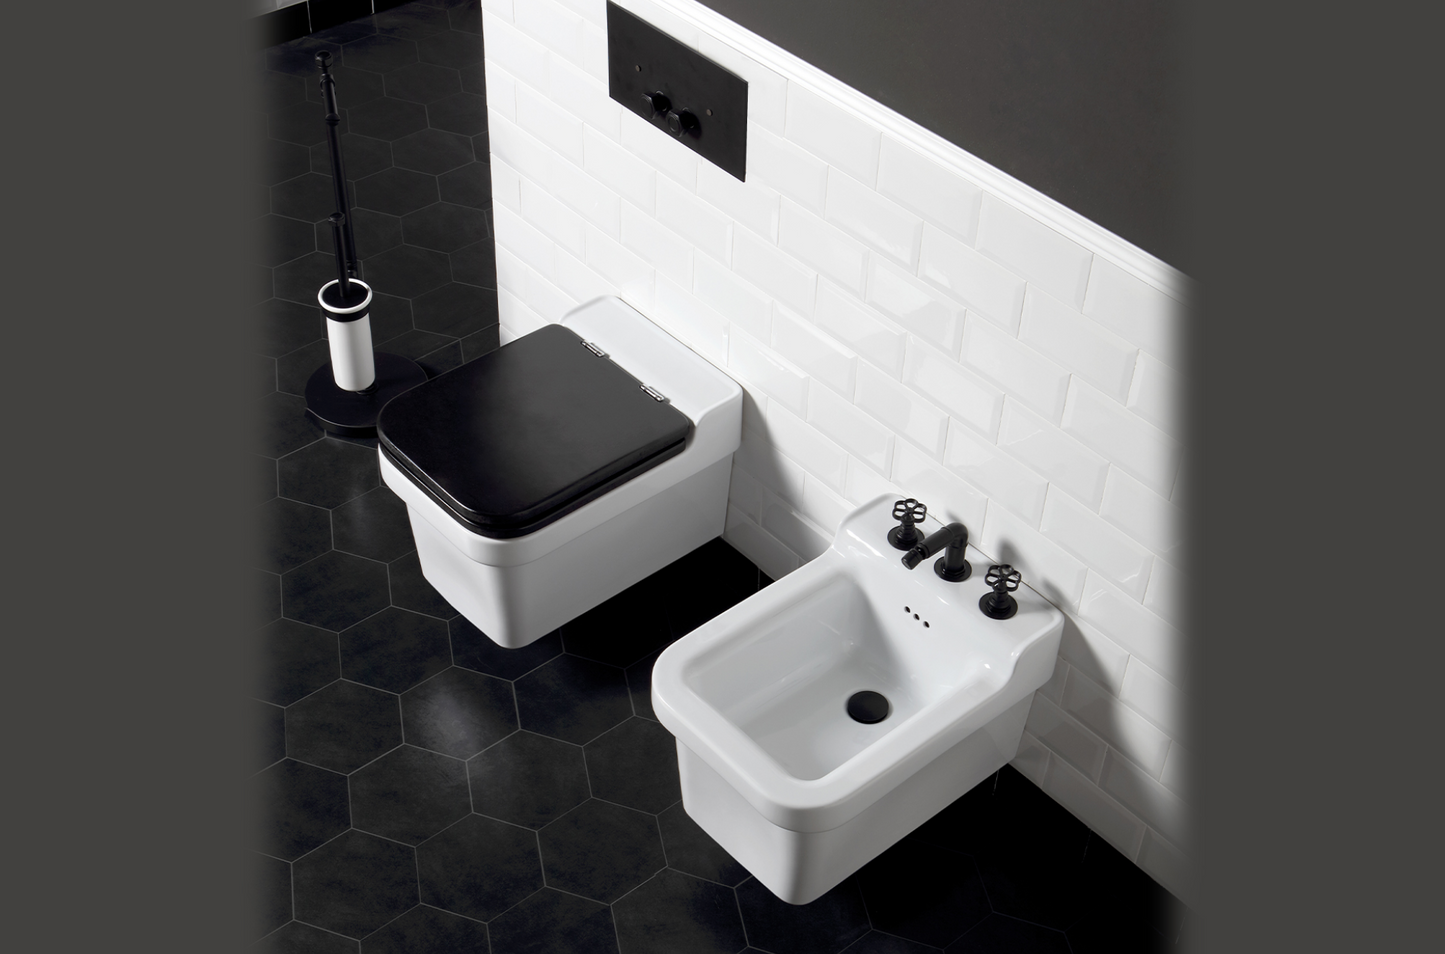 Industrialis industrial style suspended ceramic toilet